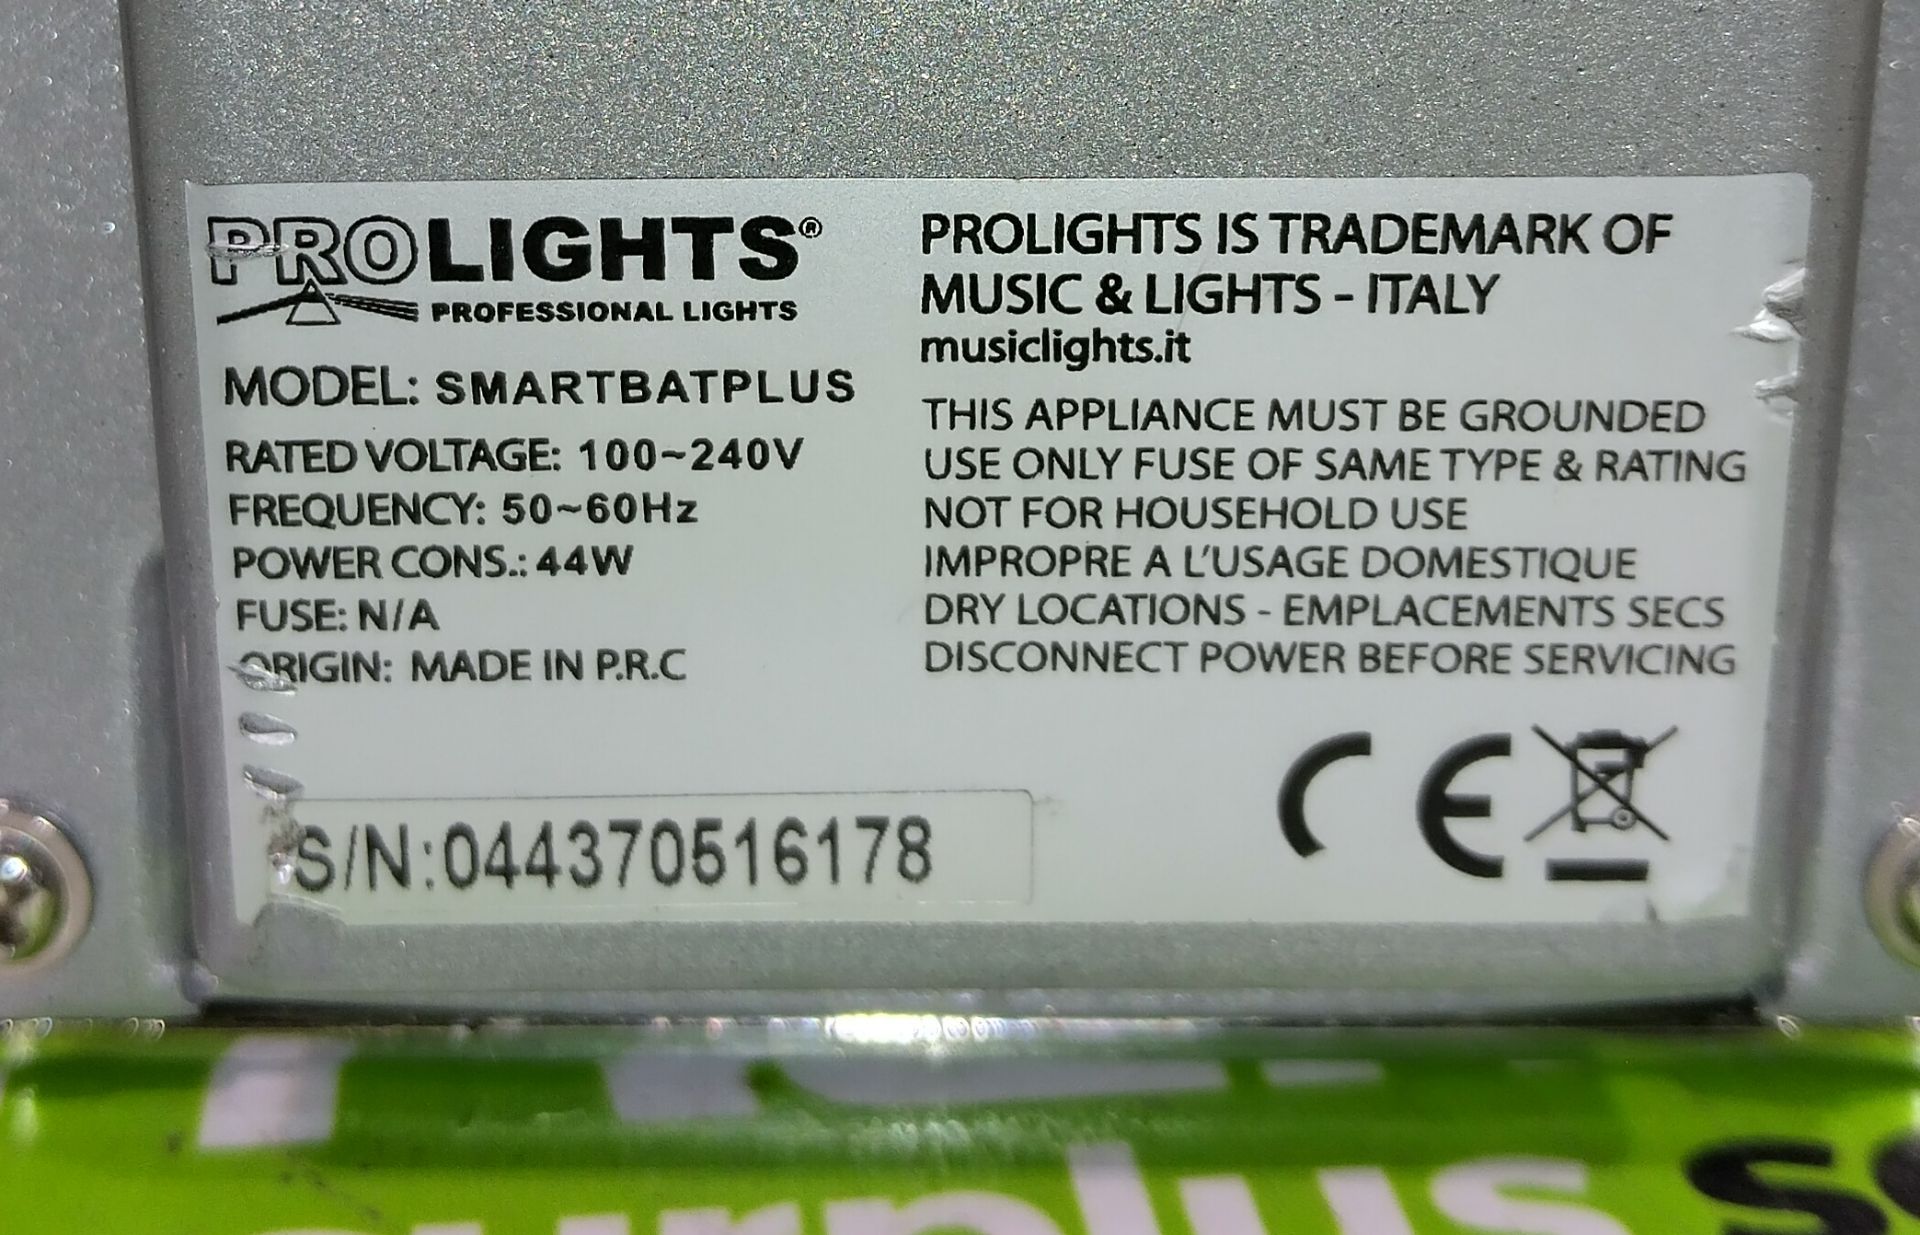 6x Prolight Smartbat battery uplighters in flight case - case dimensions: L 540 x W 470 x H 560mm - Image 4 of 10